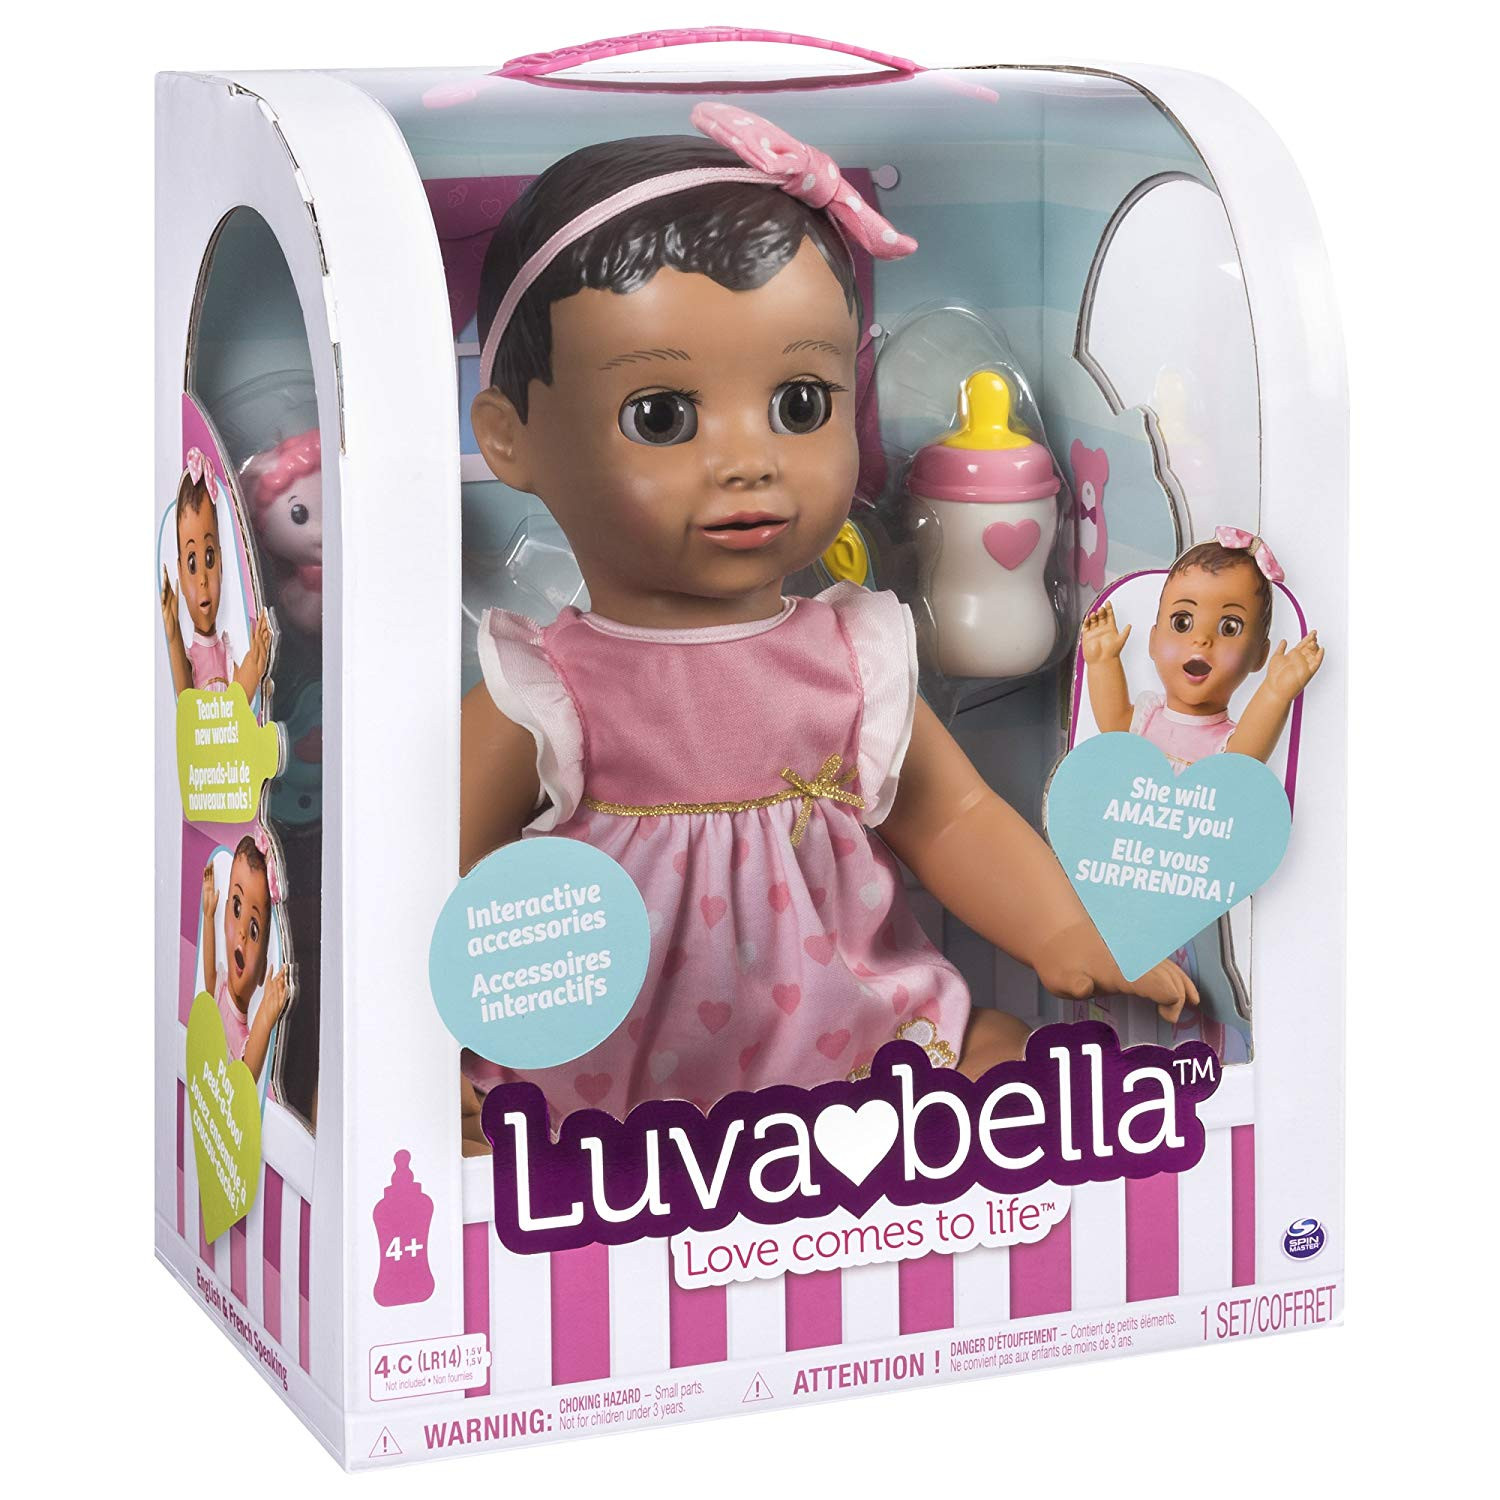 Luvabella Responsive Baby Doll - Brunette Hair
 Luvabella Brunette Hair Responsive Baby Doll with Real